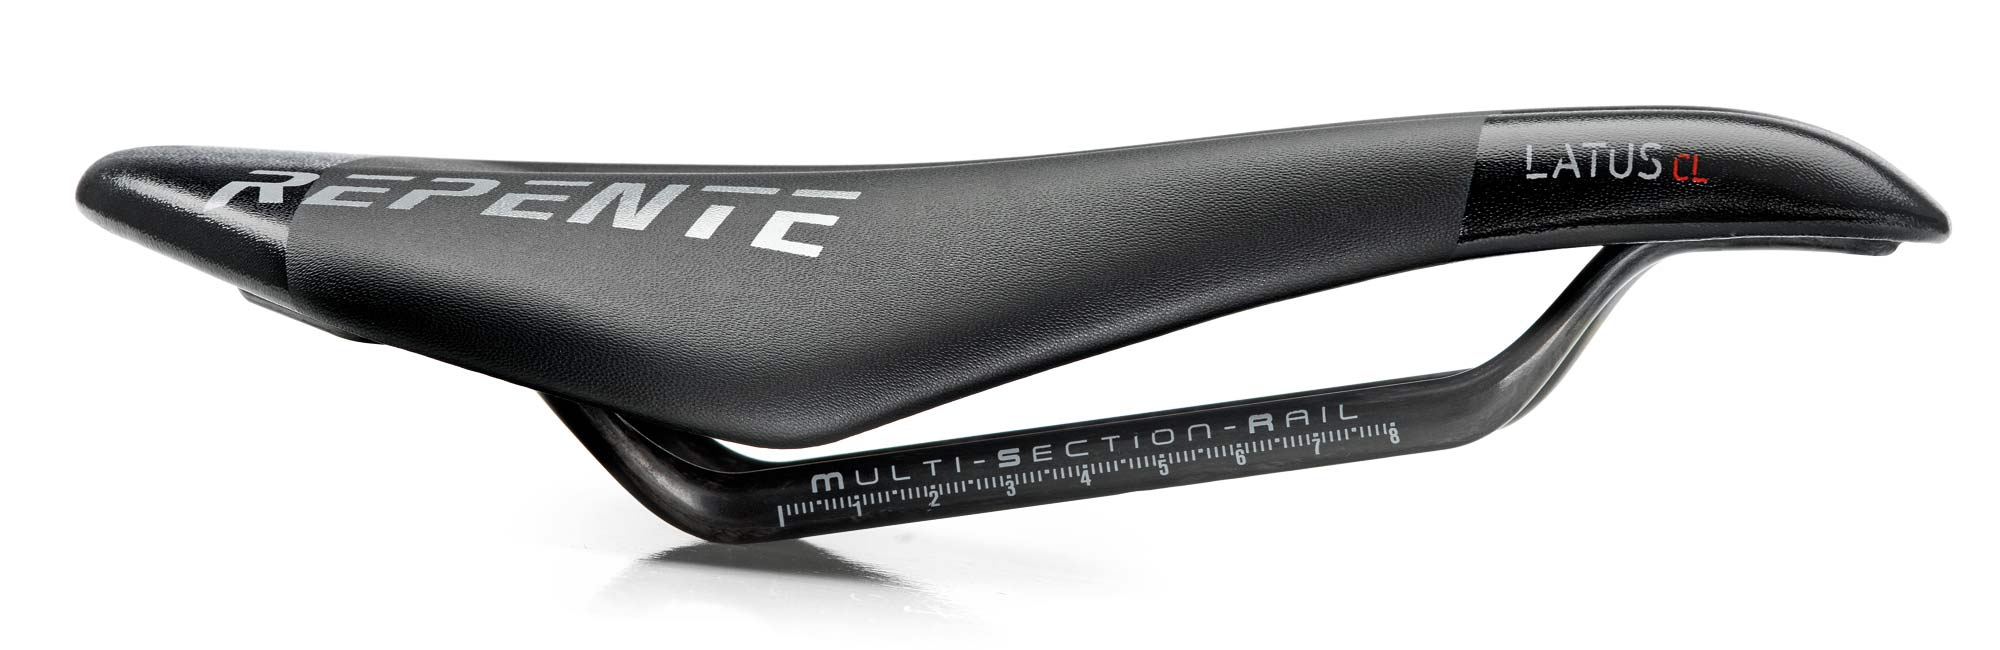 Repente Magnet & Latus CL carbon saddles, ultralight fixed base UD carbon rail bike saddles